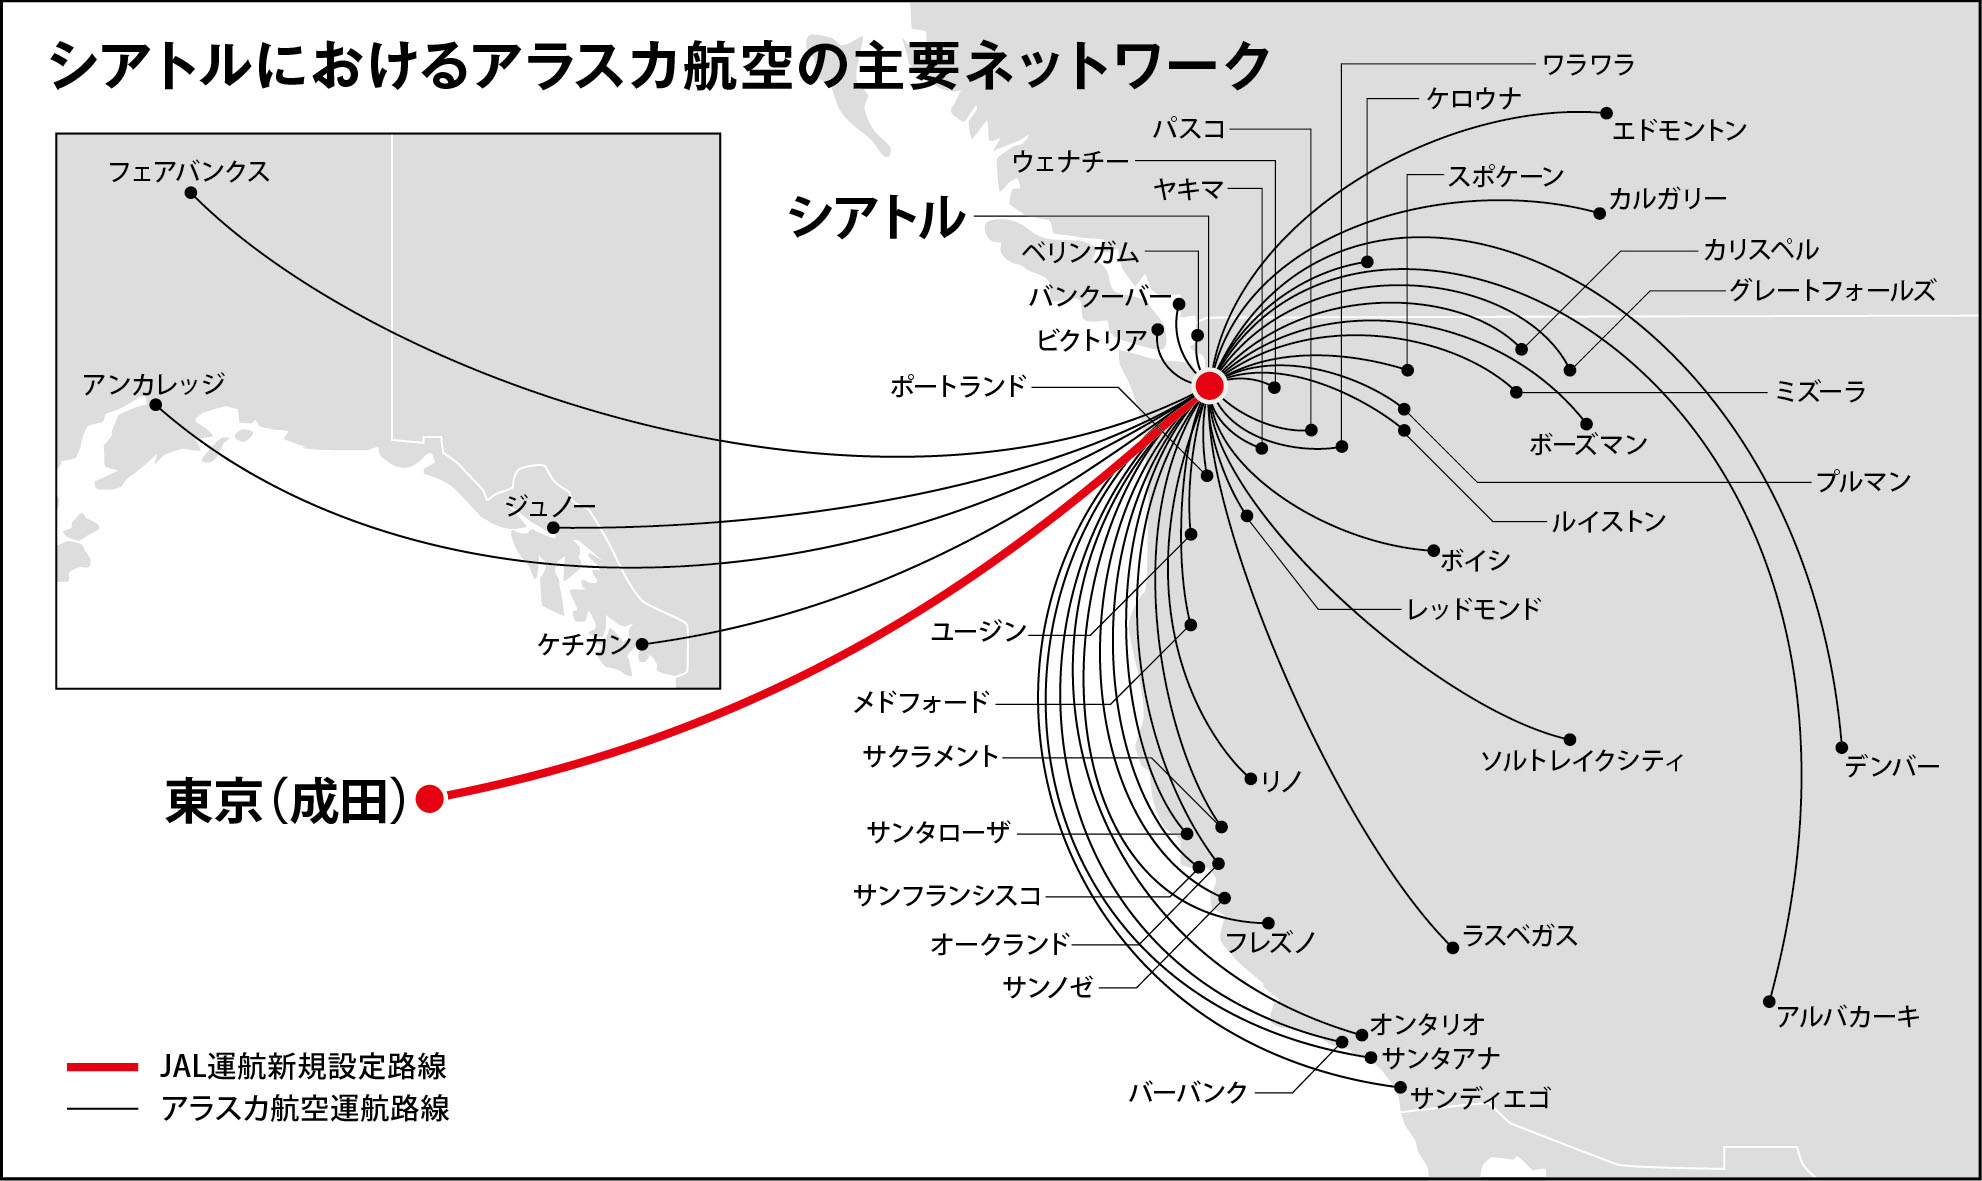 Jal アラスカ航空 コードシェアを拡大 日本航空株式会社のプレスリリース